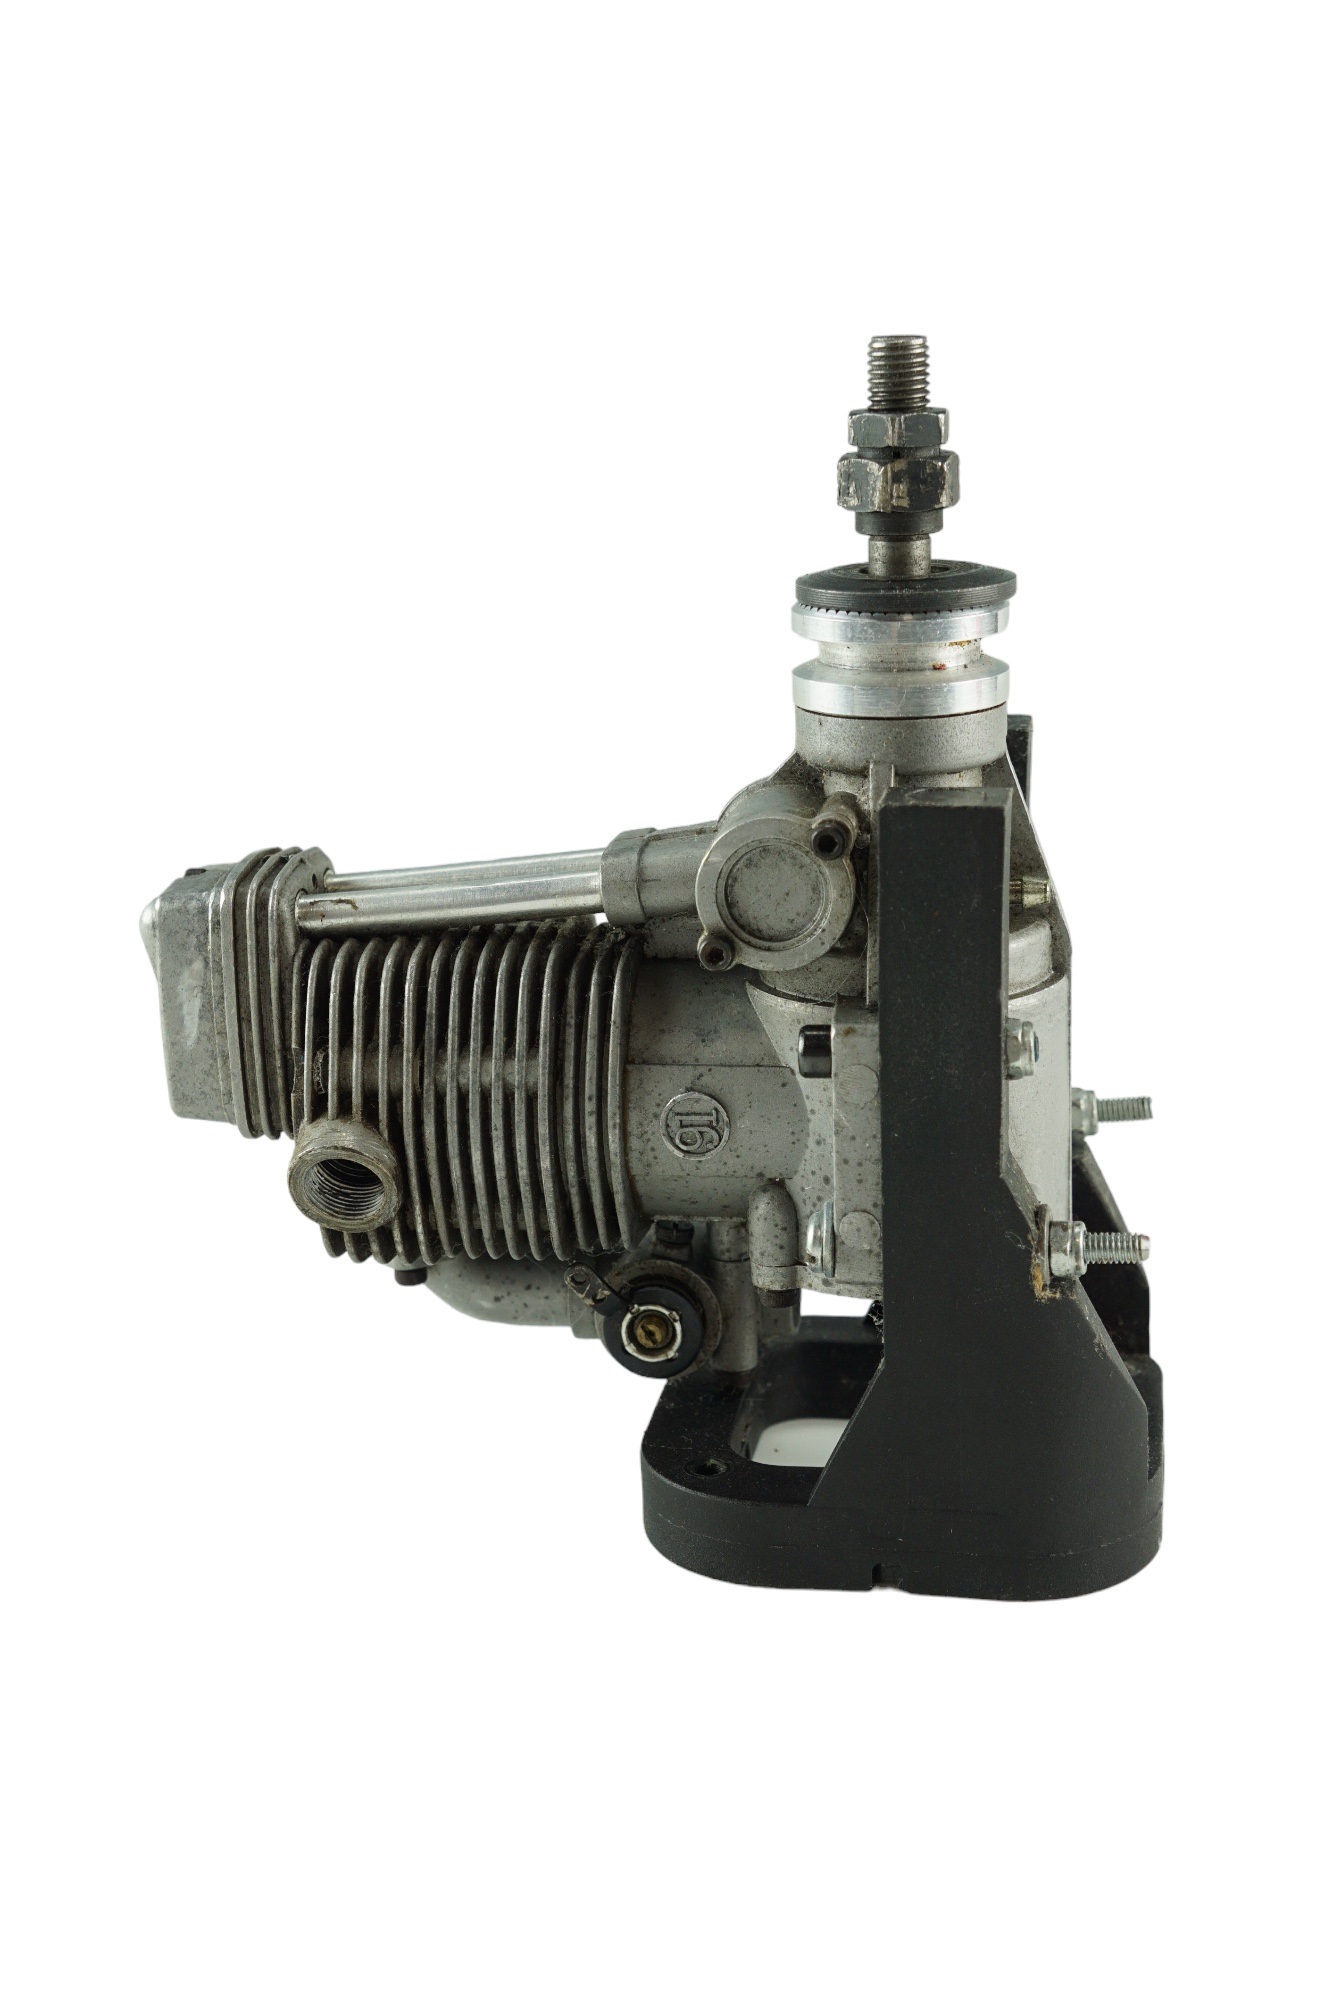 A Super Custom (SC) 91 four-stroke nitro engine, 15 x 13 x 6.5 cm - Image 2 of 6